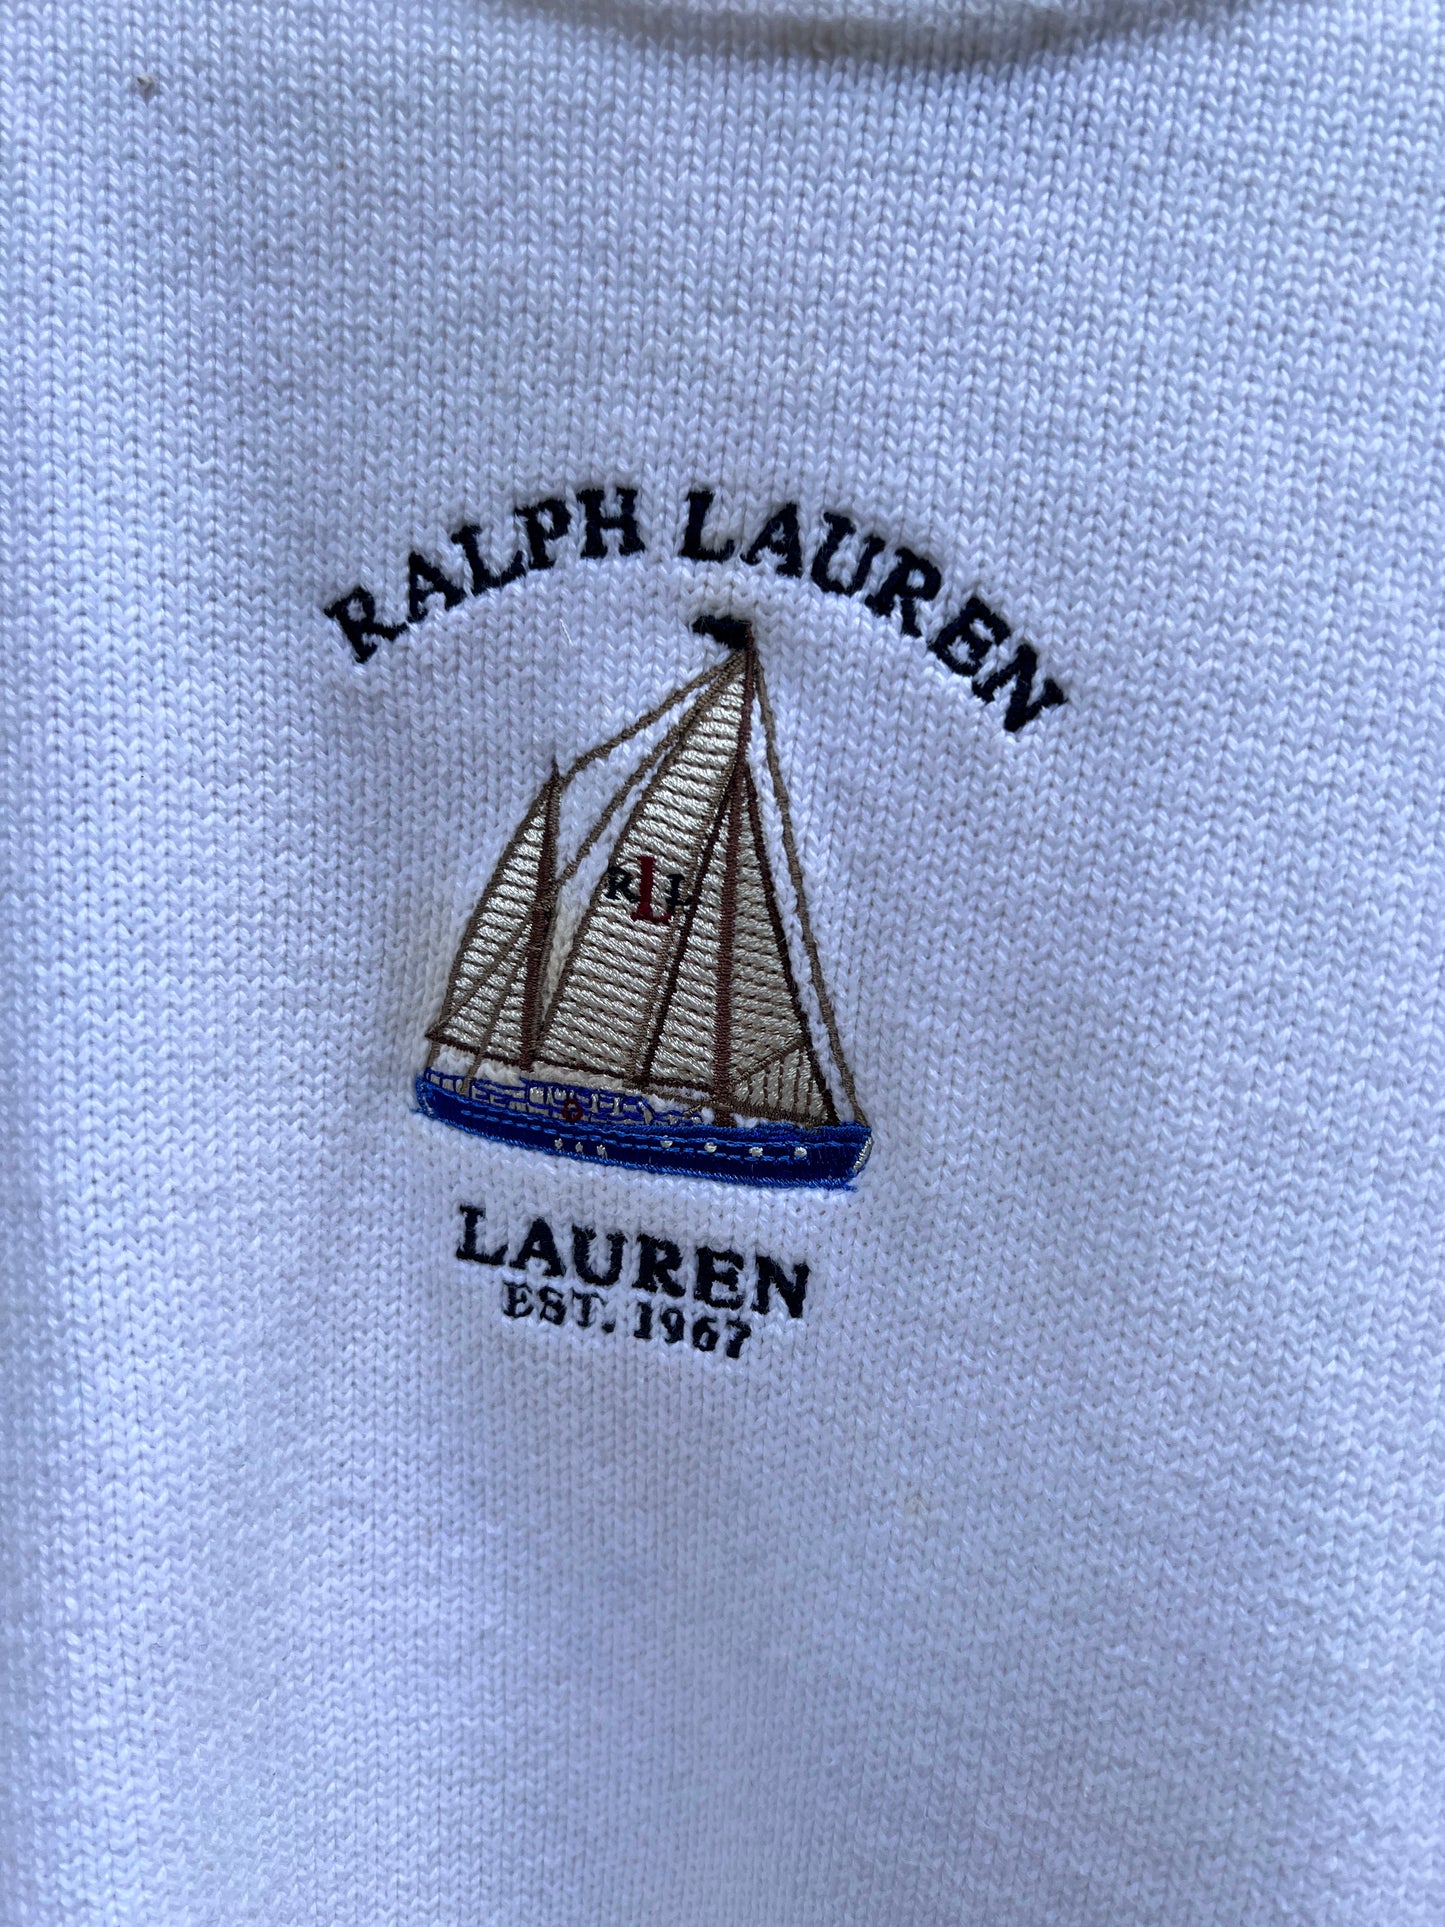 Vintage Ralph Lauren Women's Sweater Sweat Shirt